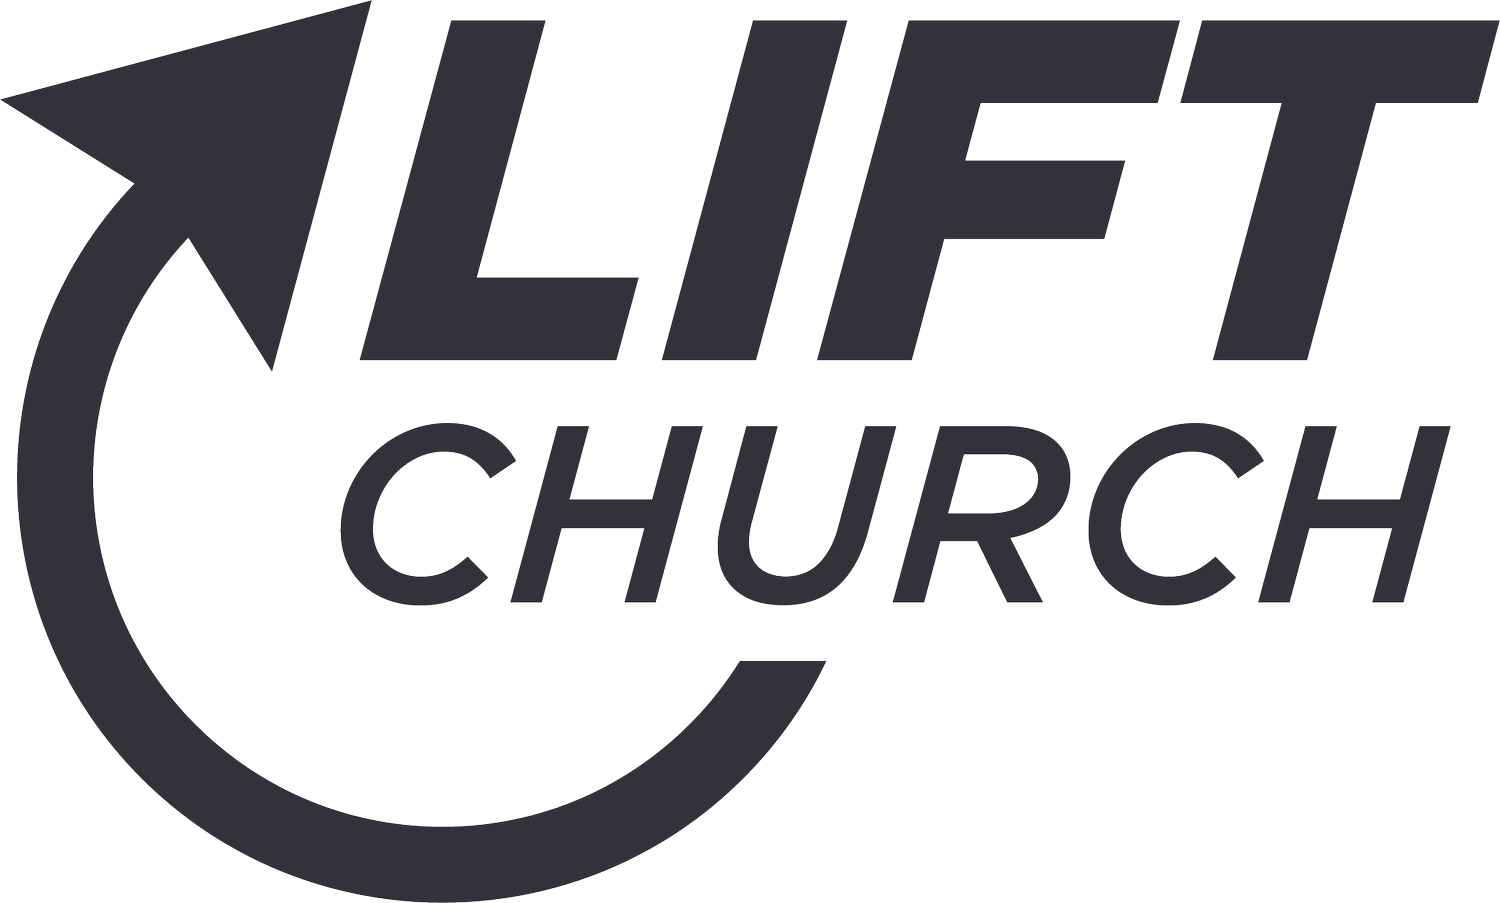 Lift Church